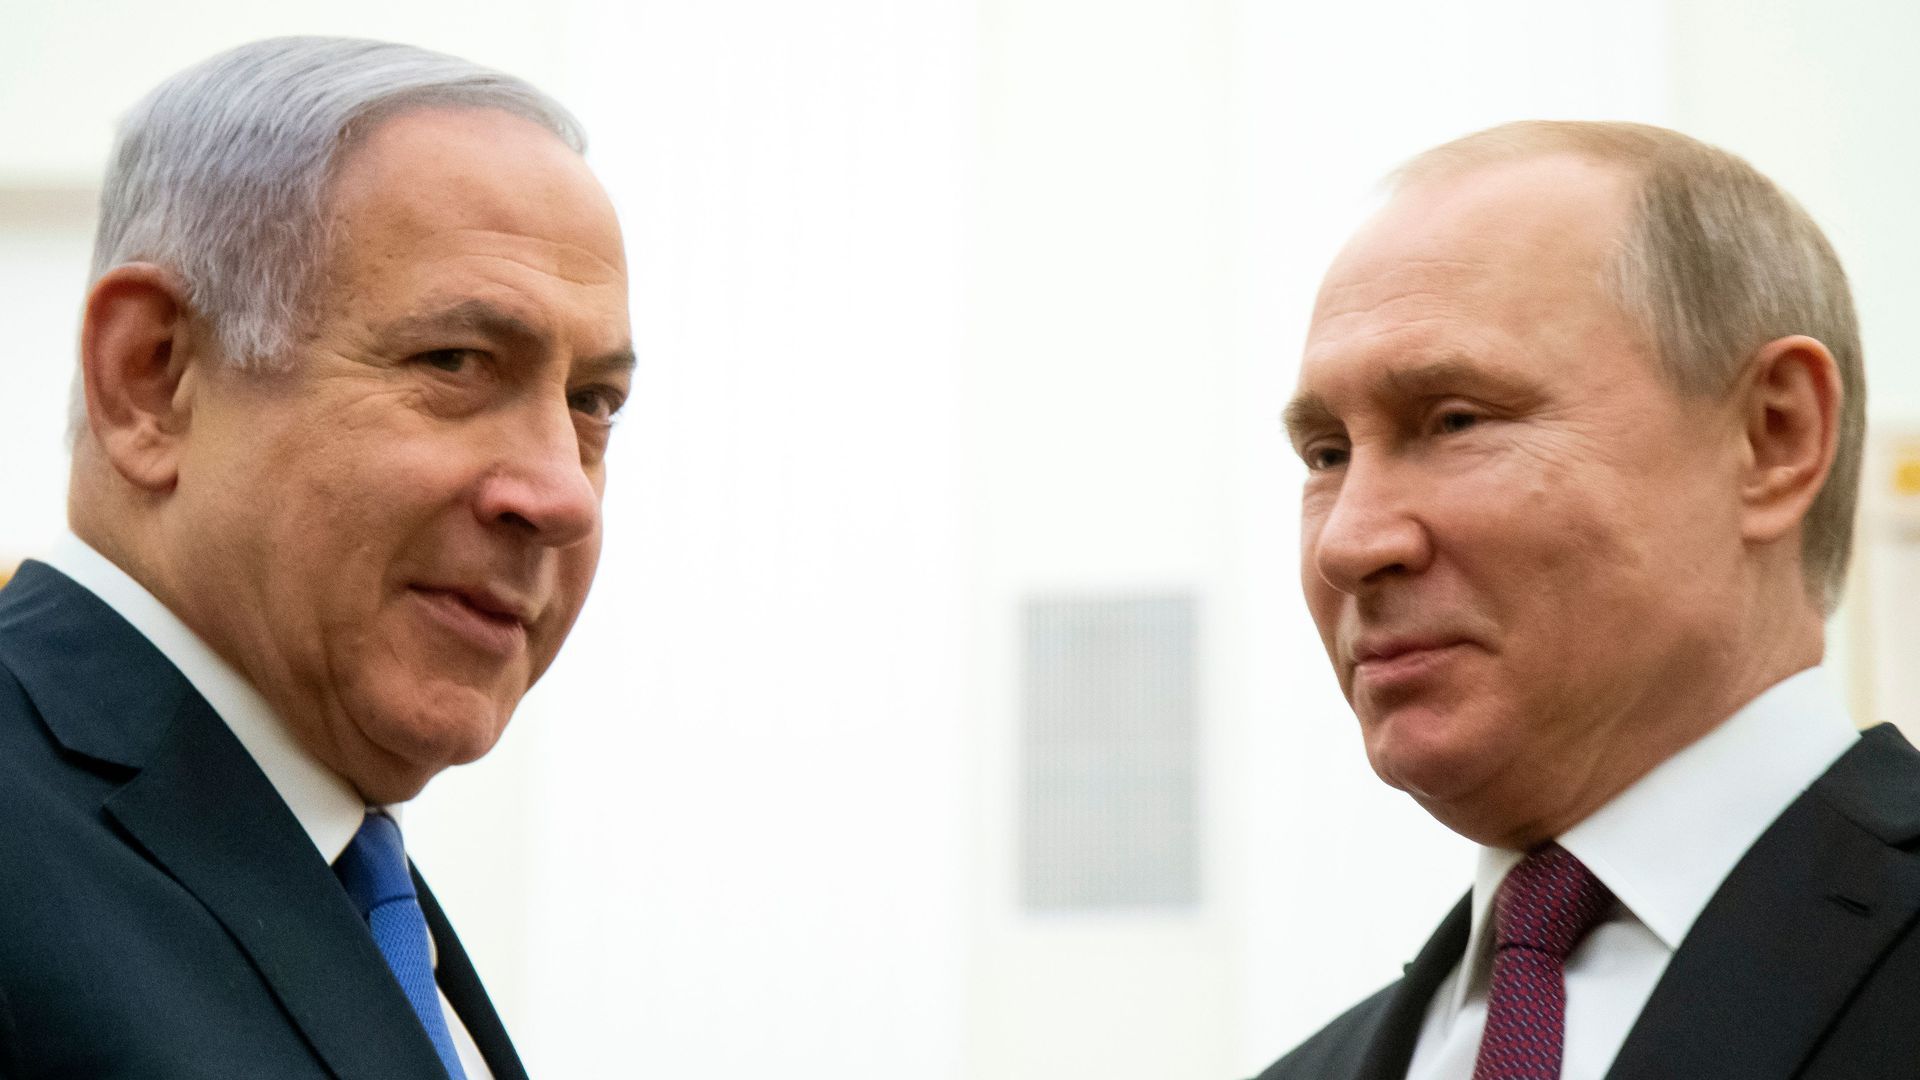 Netanyahu (L) with Putin in 2019. Photo: Alexander Zemlianichenko/AFP via Getty